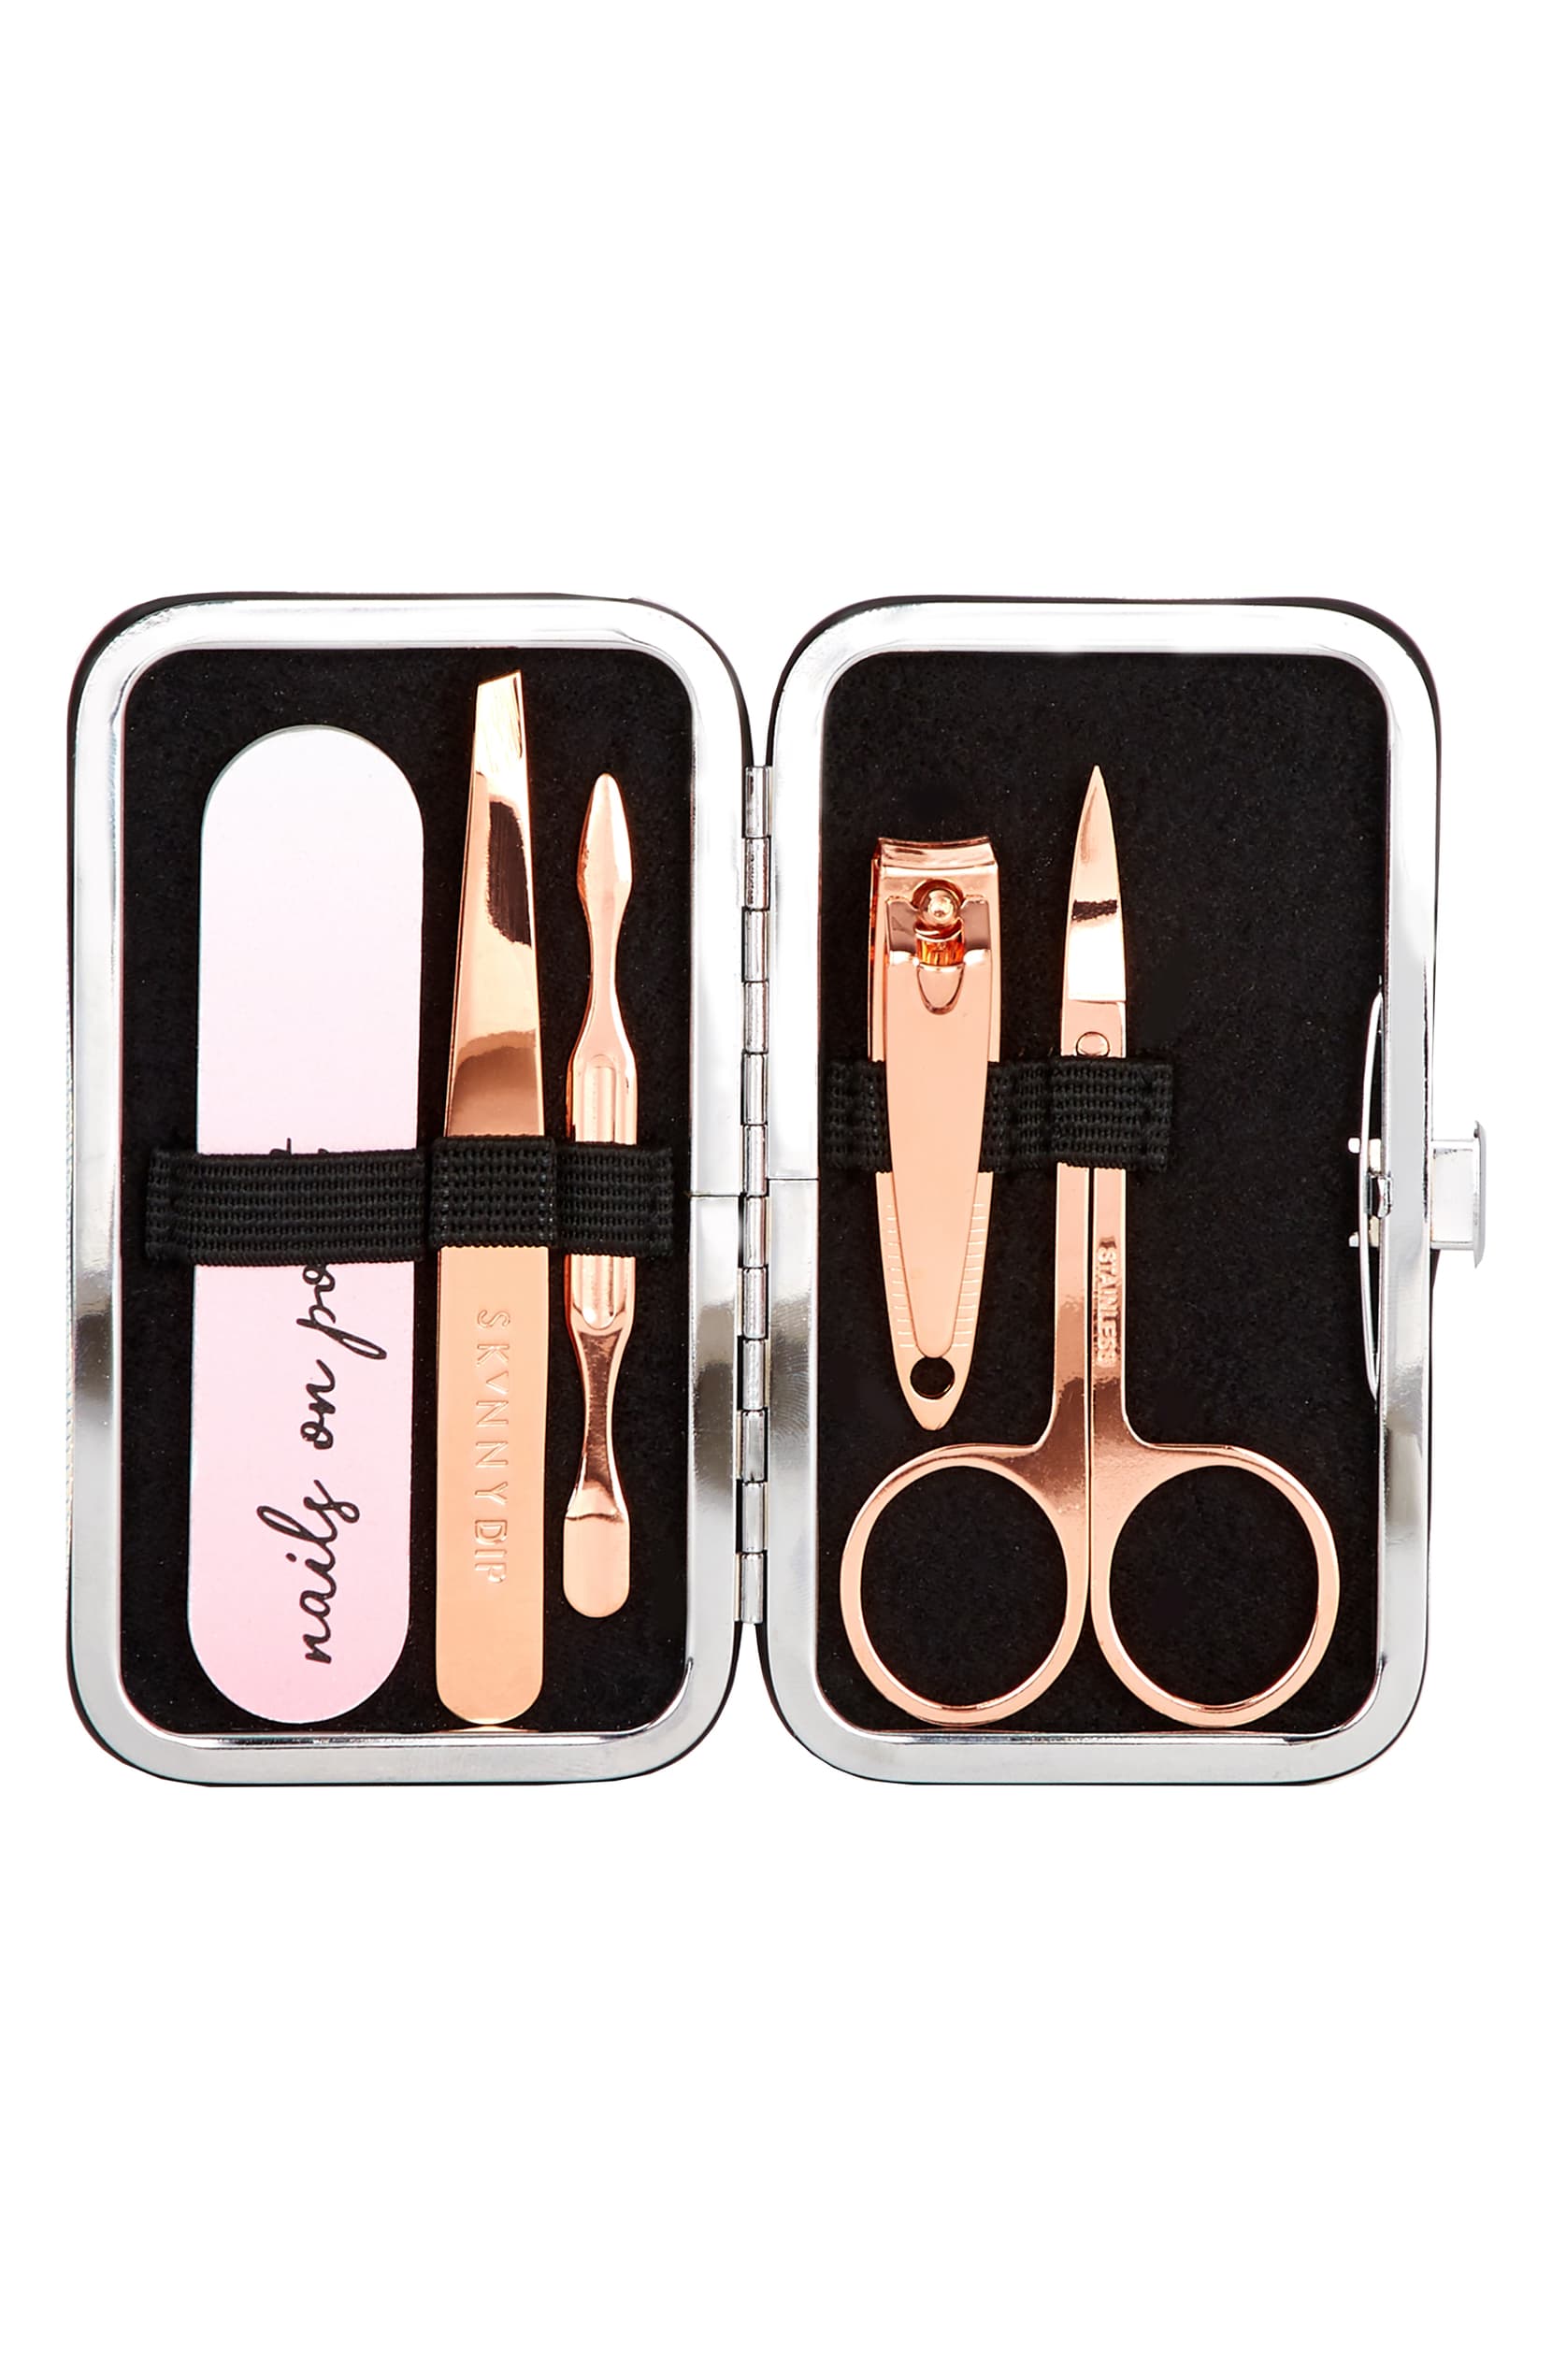 Salon Worthy Nails Home Manicure Kits,